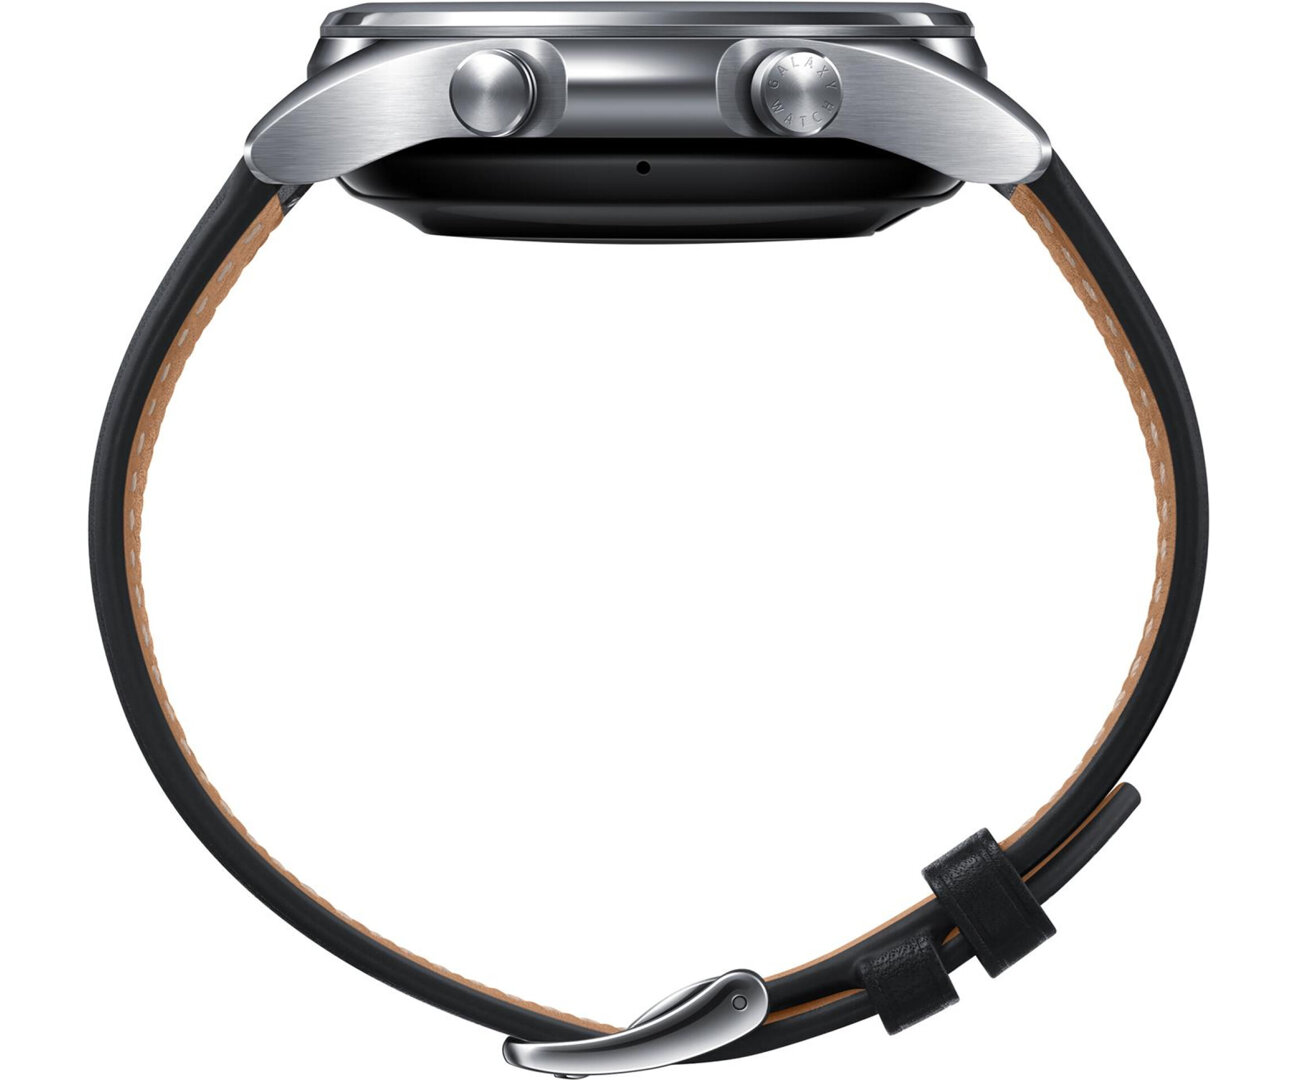 Zegarek Samsung Galaxy Watch 3 41mm (R850) - VAT 23%